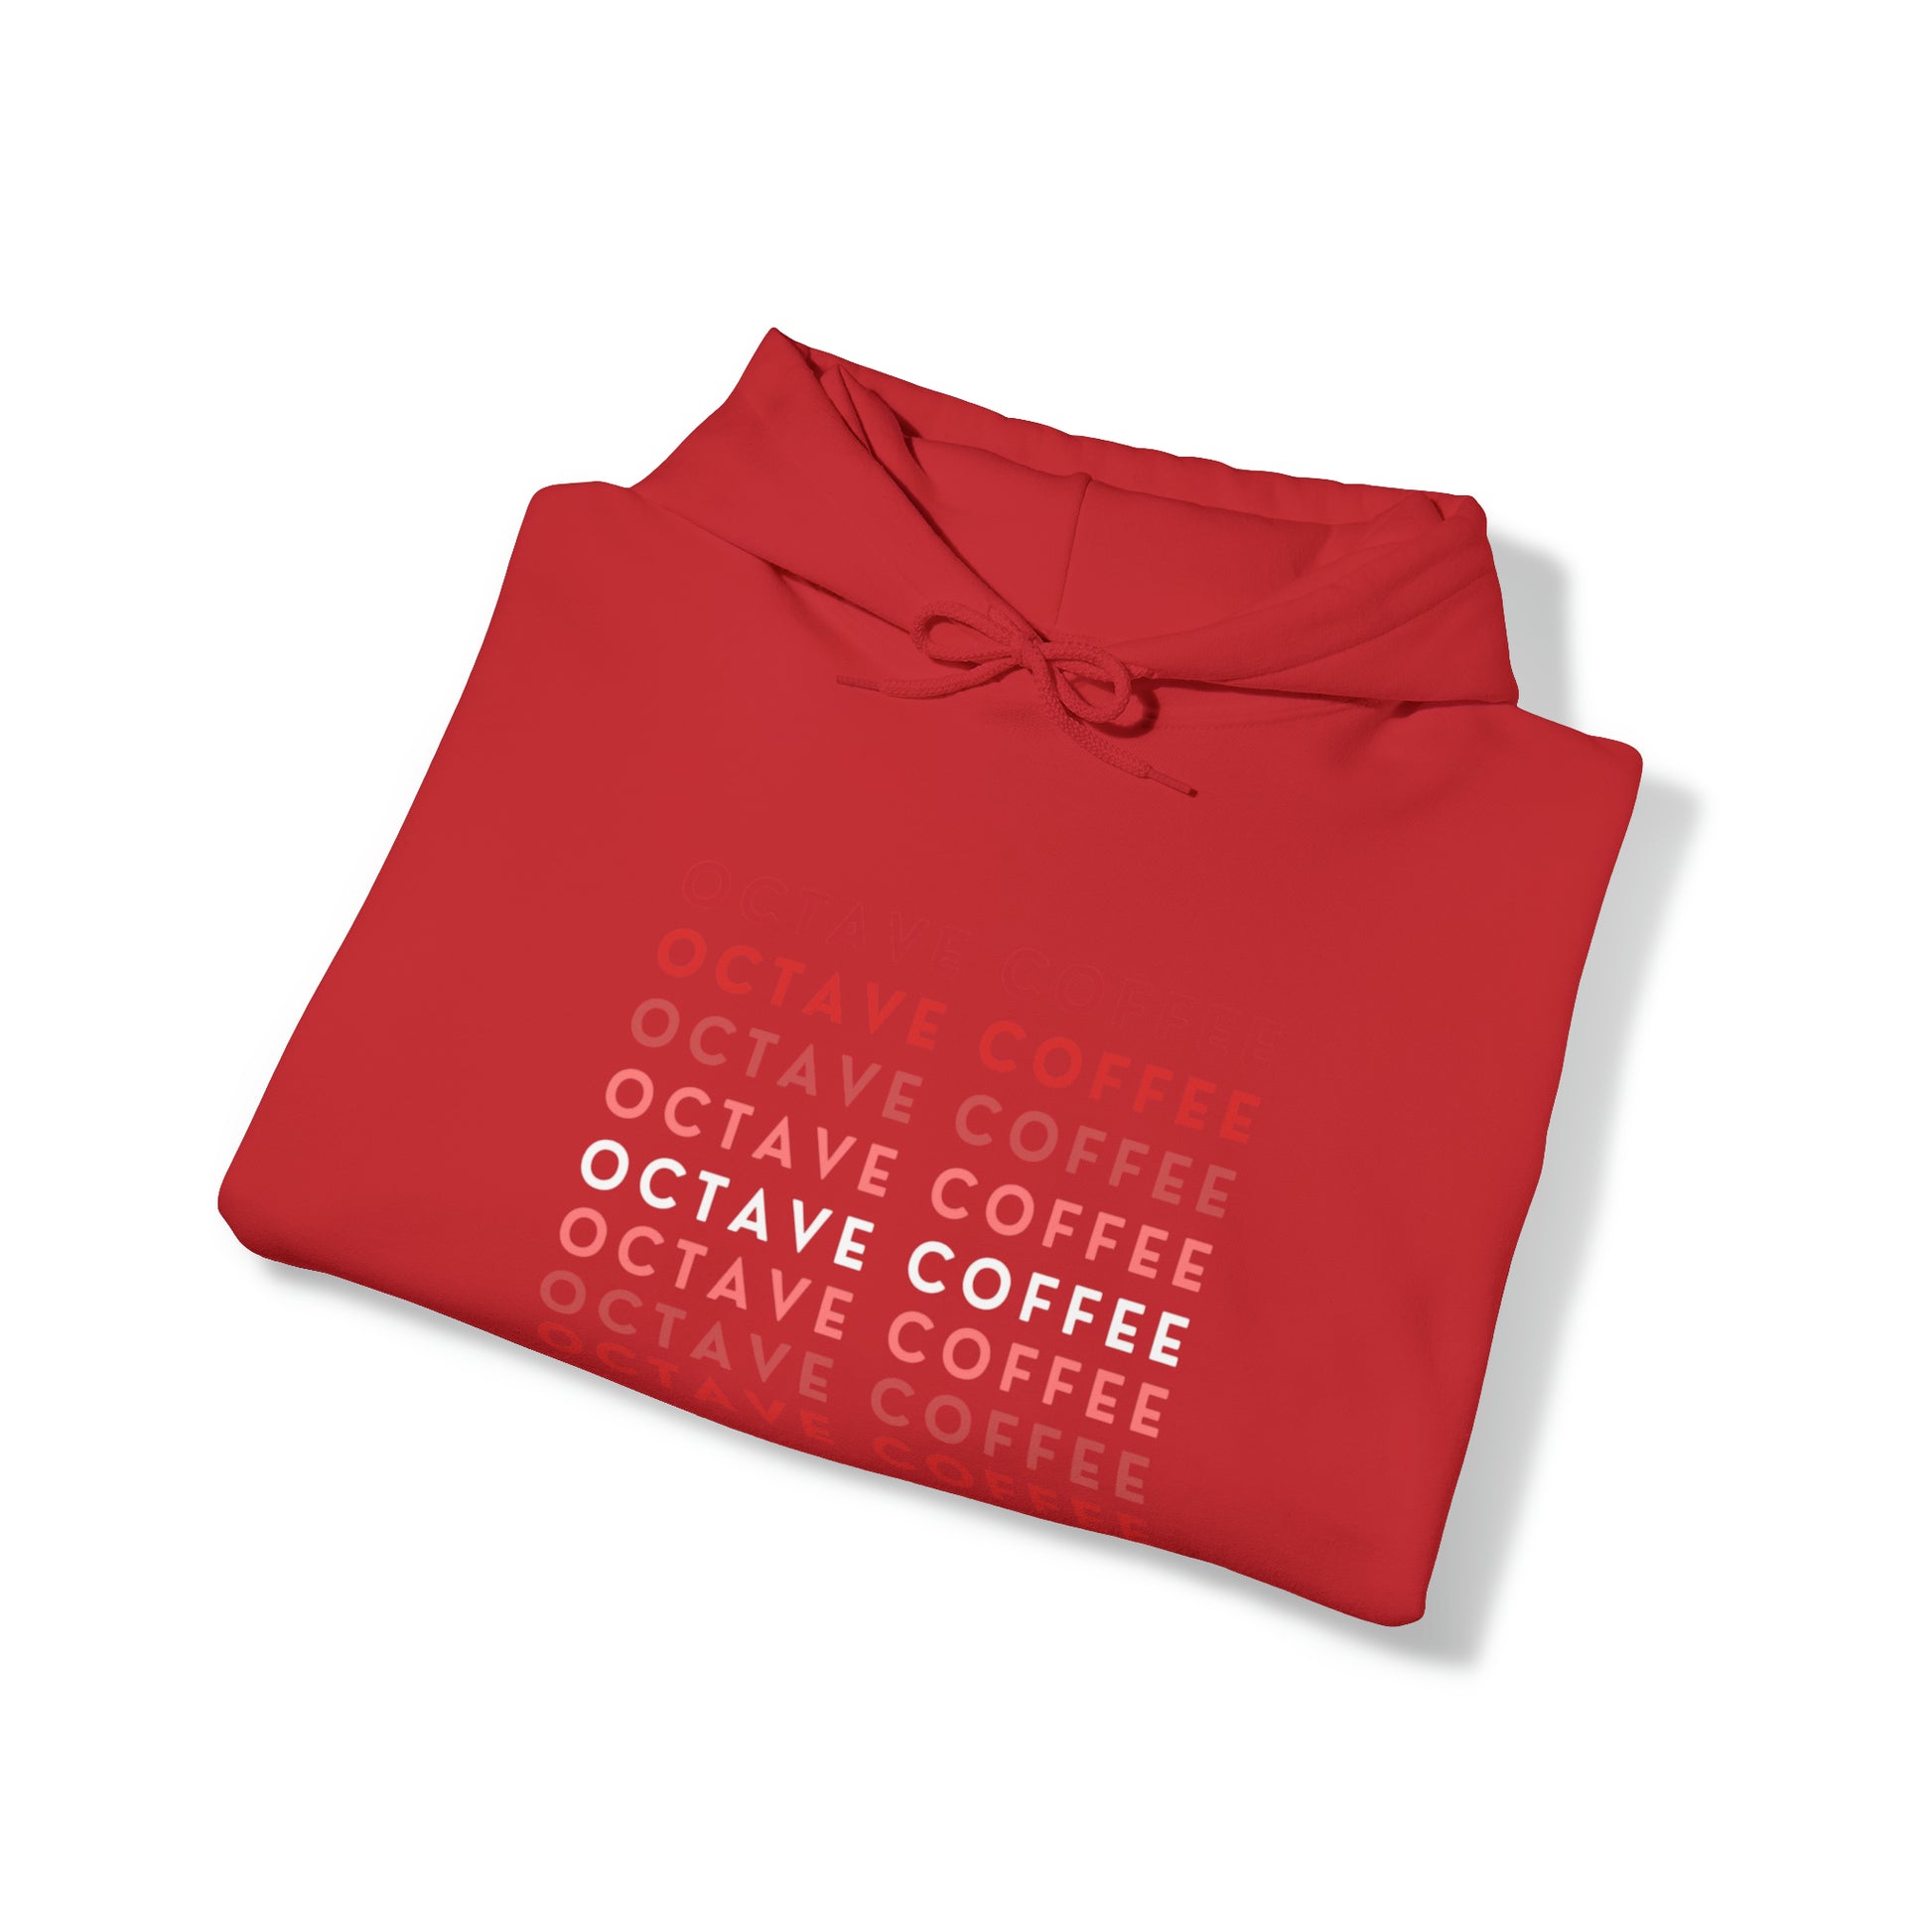 Octave Coffee | "Fade" Hooded Sweatshirt - Octave Coffee Co.